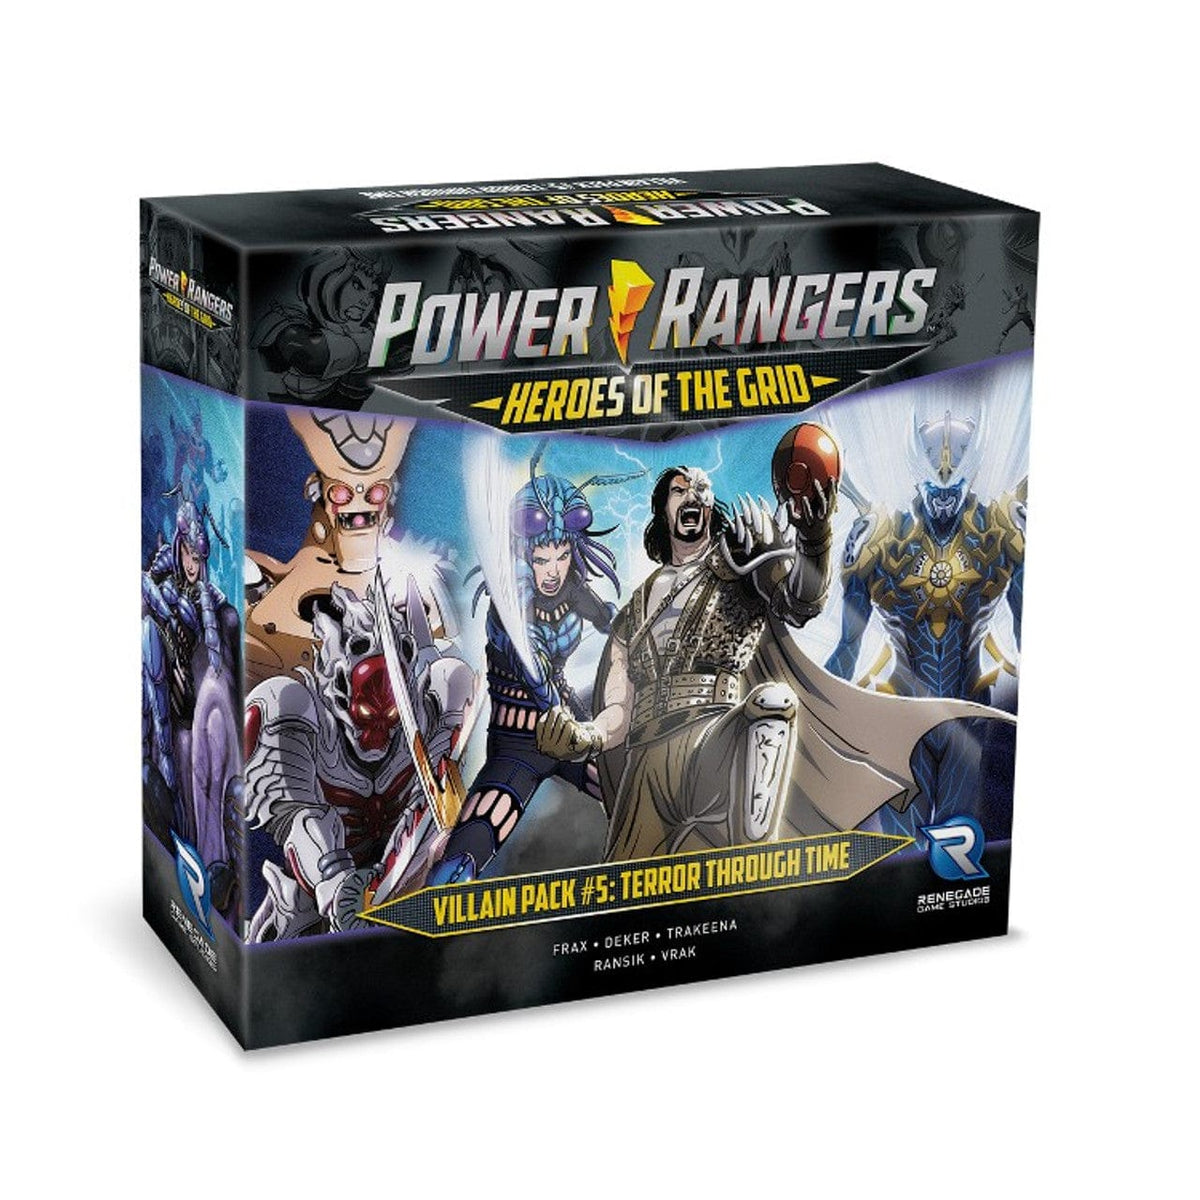 Power Rangers - Heroes of the Grid: Villain Pack #5 - Terror Through Time - Third Eye